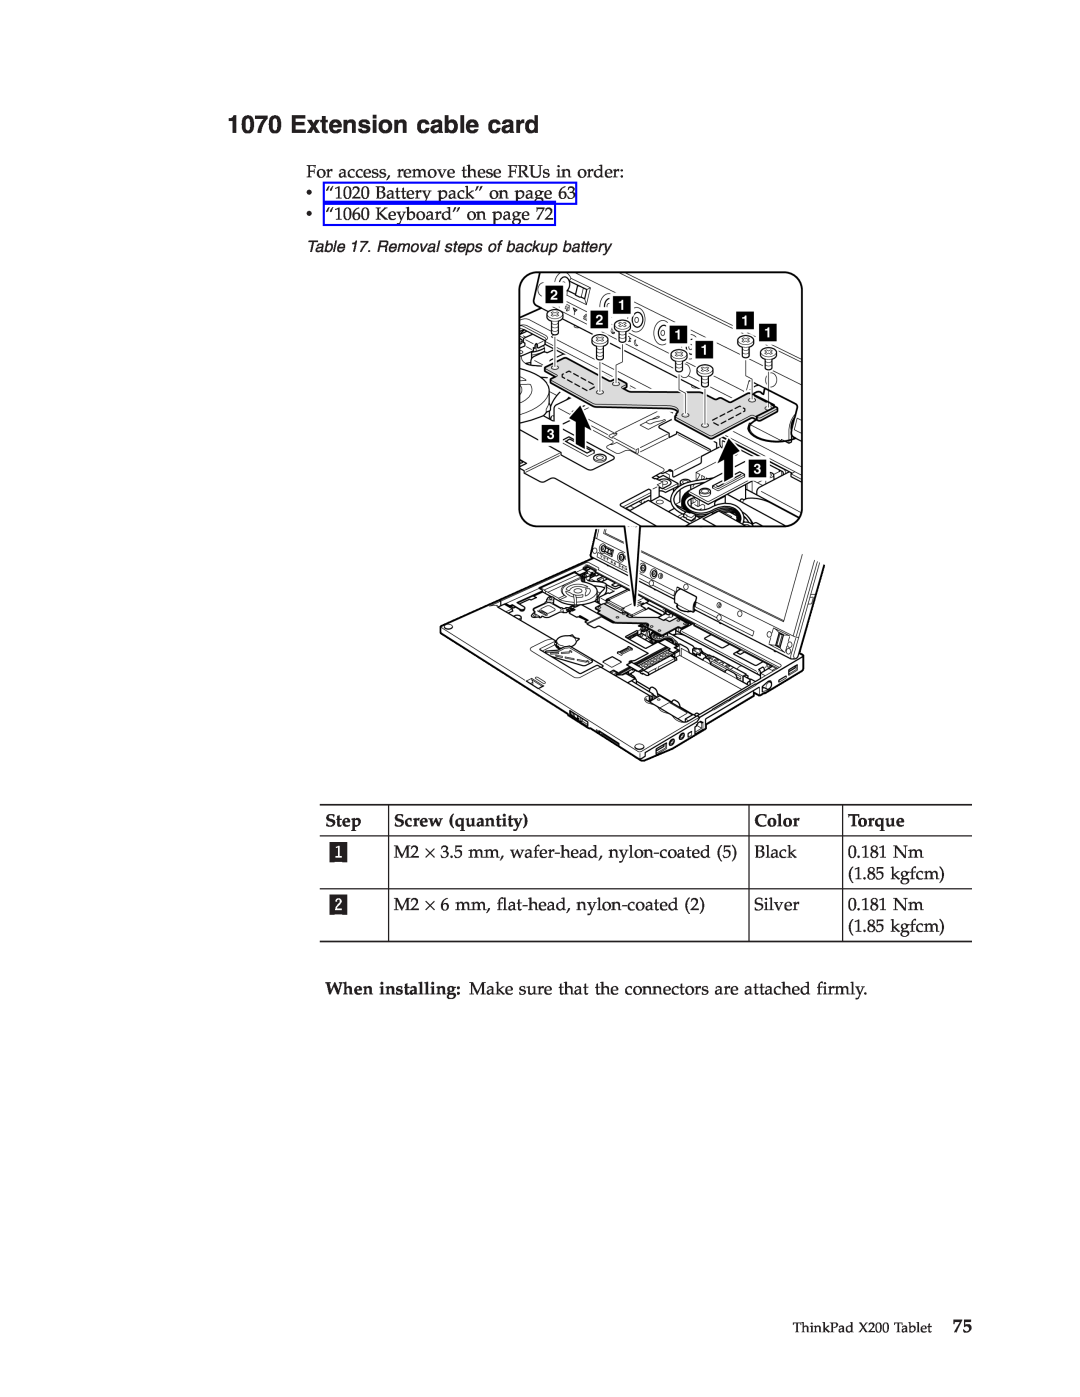 Lenovo X200 manual Extension cable card, Step, Screw quantity, Color, Torque 